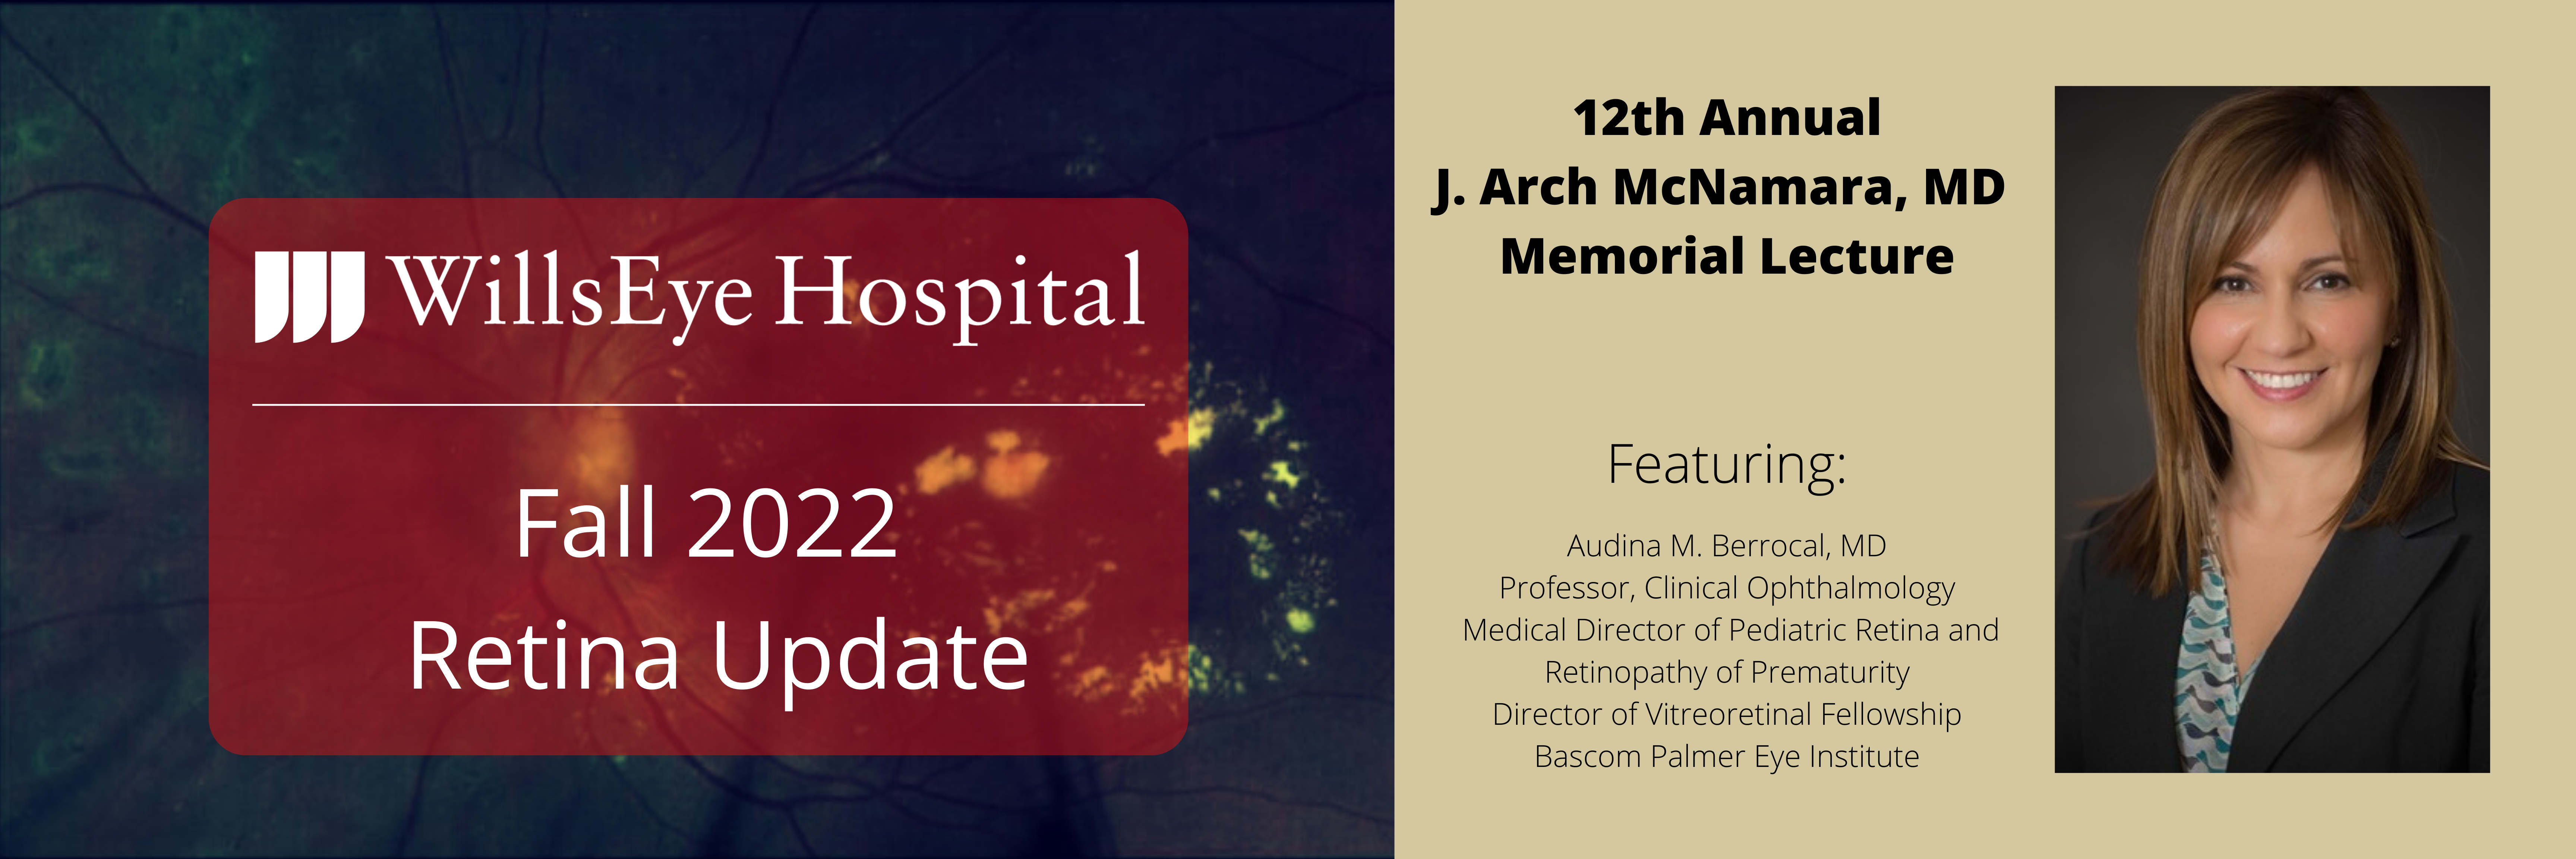 OnDemand Retina Update - Feat. 12th Annual J. Arch McNamara, MD Memorial Lecture Banner